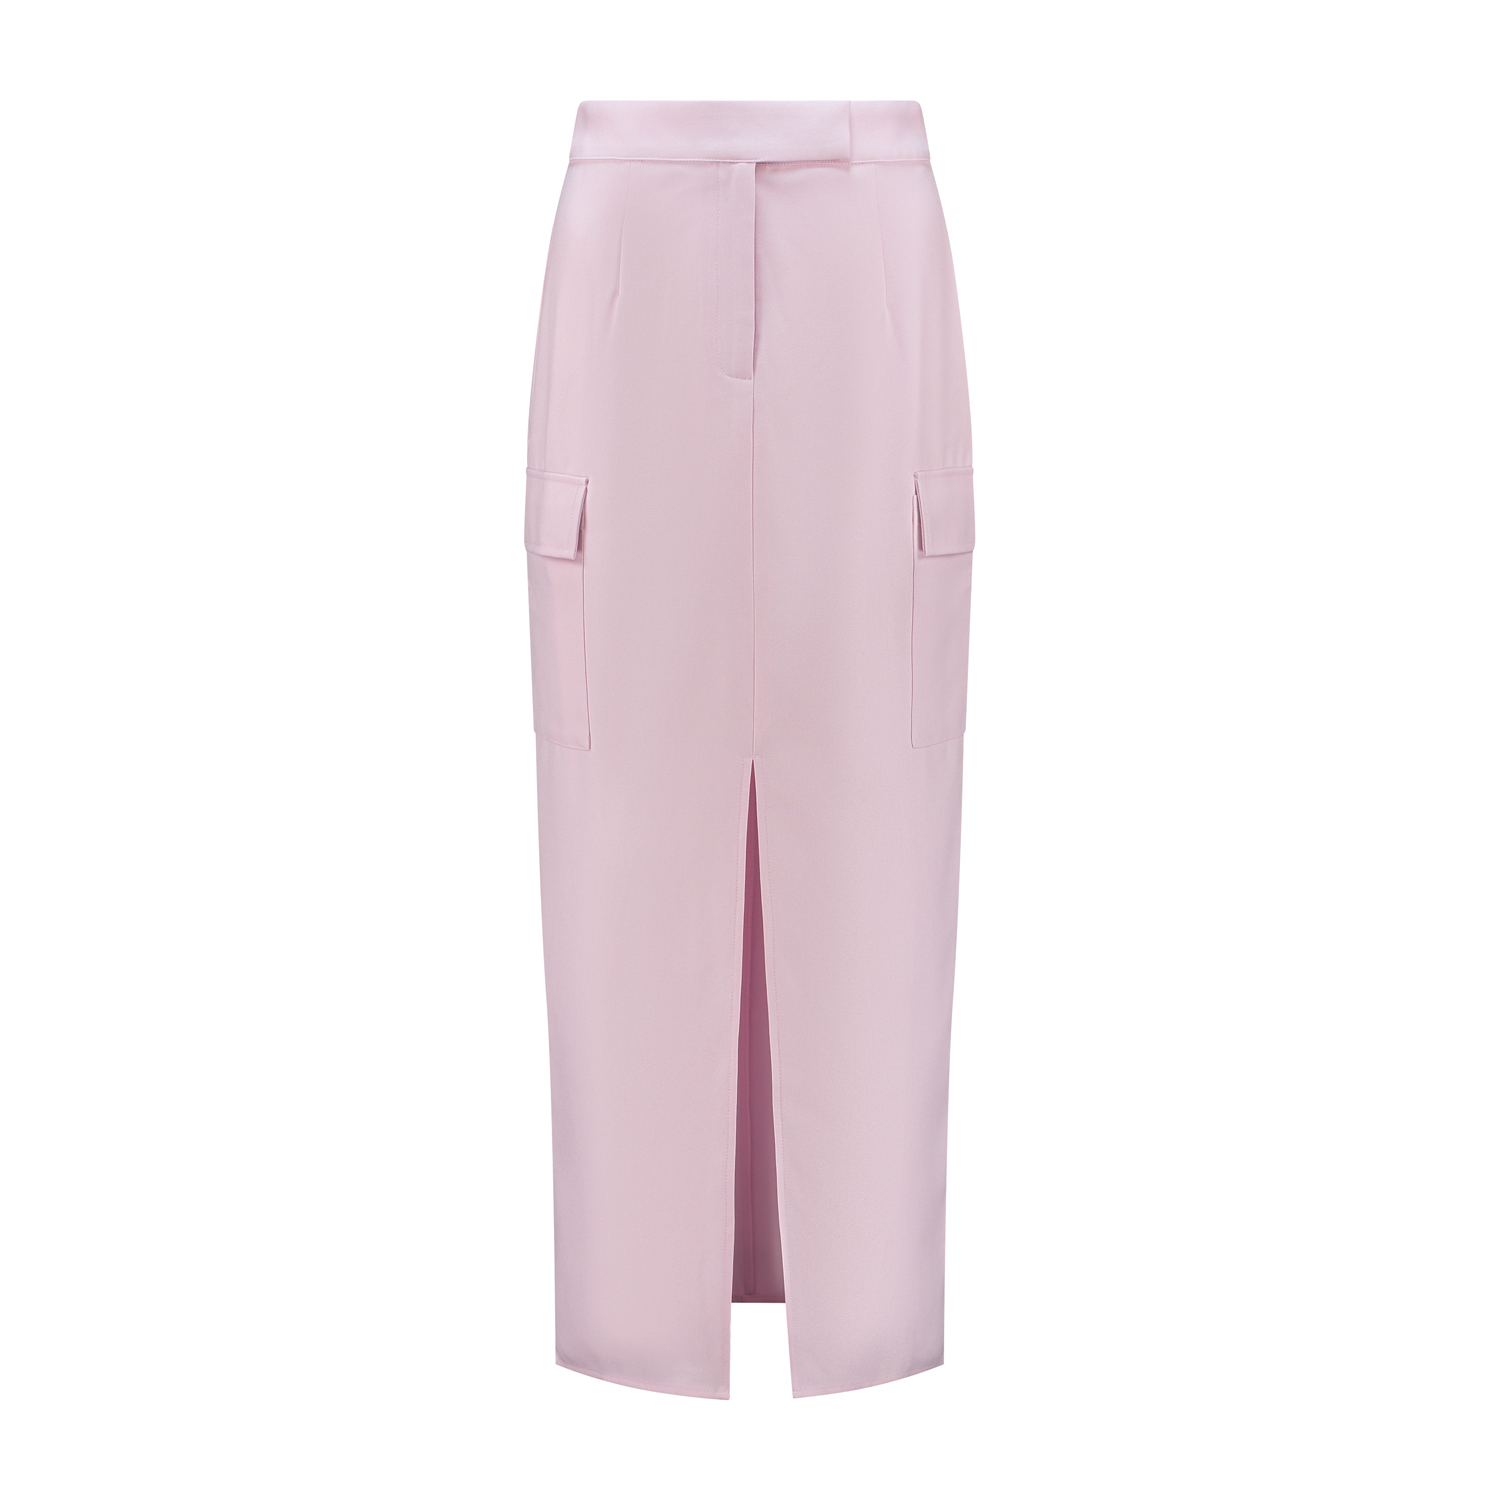 kourtney skirt light pink_Front